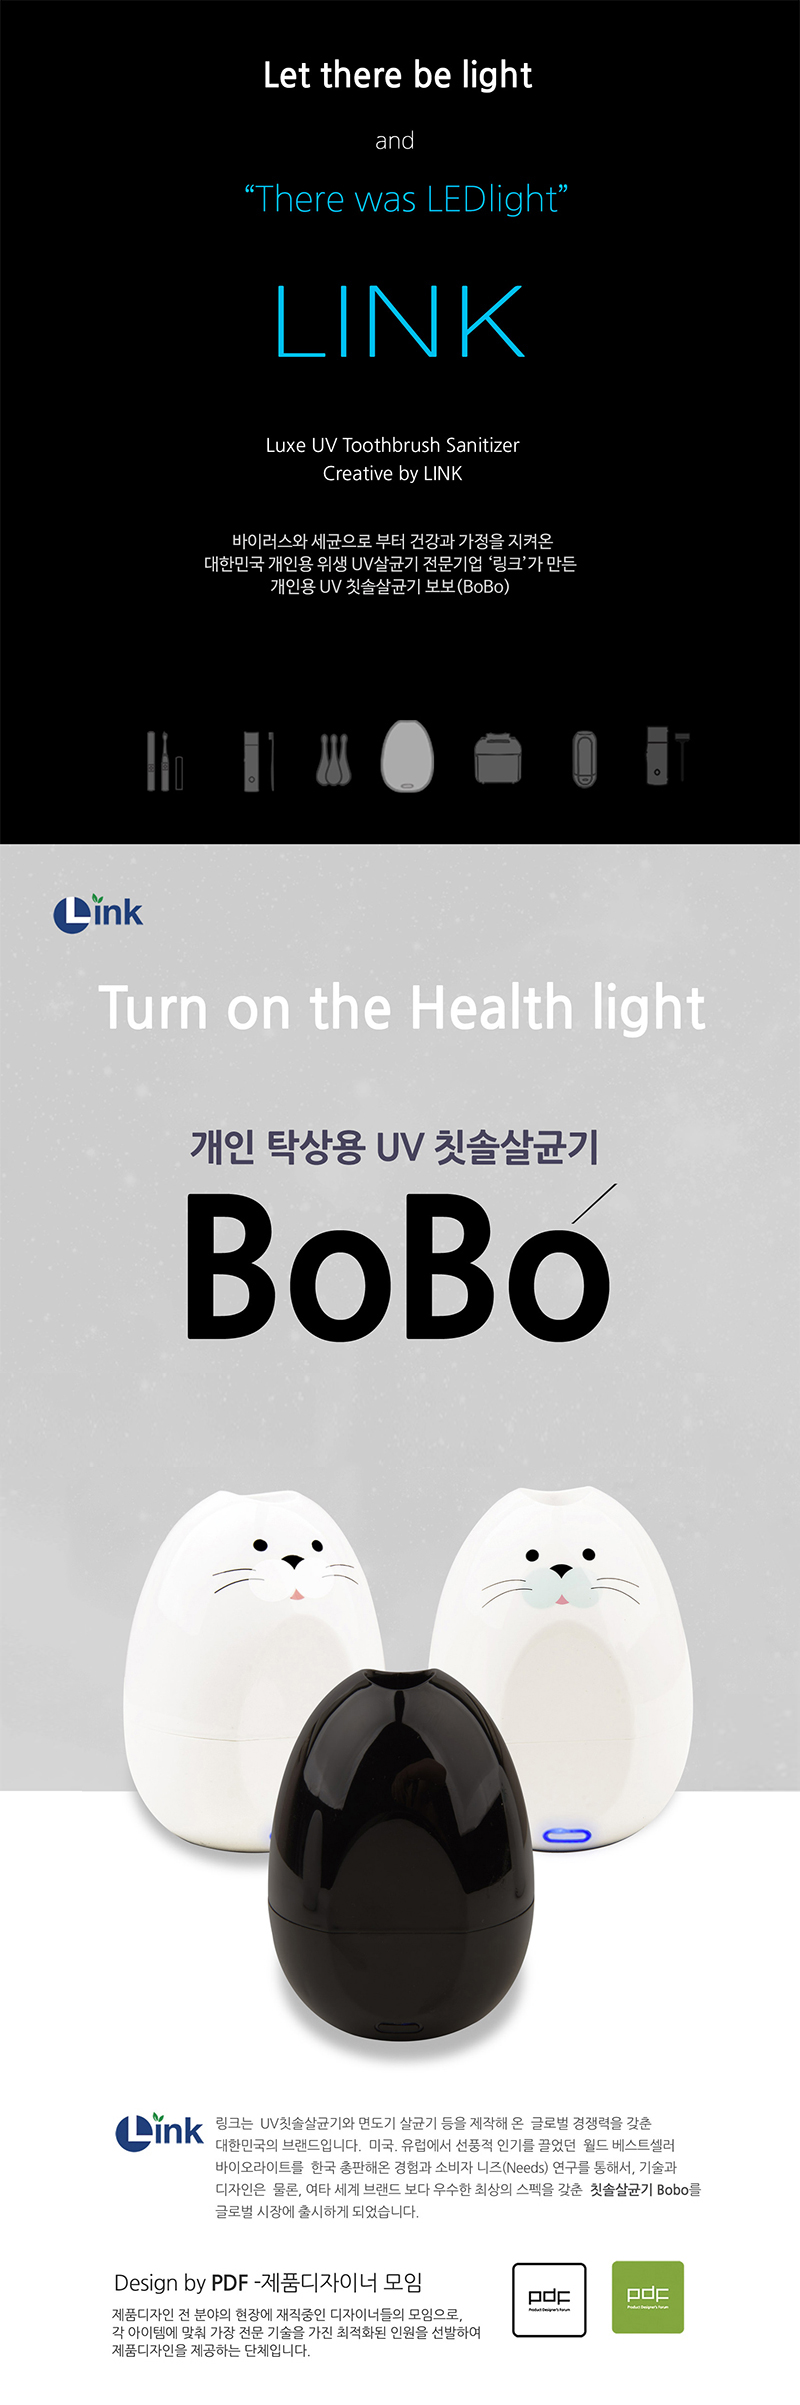 Let there be light and "There was LEDlight" LINK, 바이러스와 세균으로 부터 건강과 가정을 지켜온 대한민국 개인용 위생 UV살균기 전문기업'링크'가 만든 개인용 UV칫솔상균기 보보(bobo)